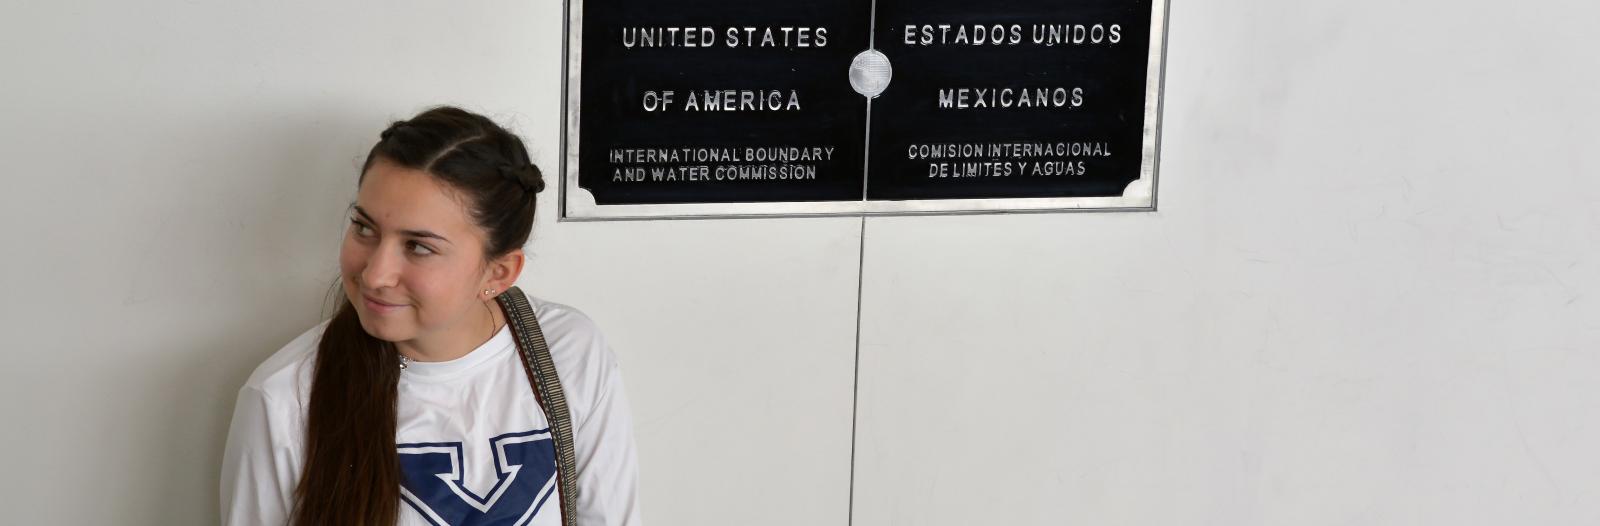 Valencia Alvarez on the US-MEXICO border